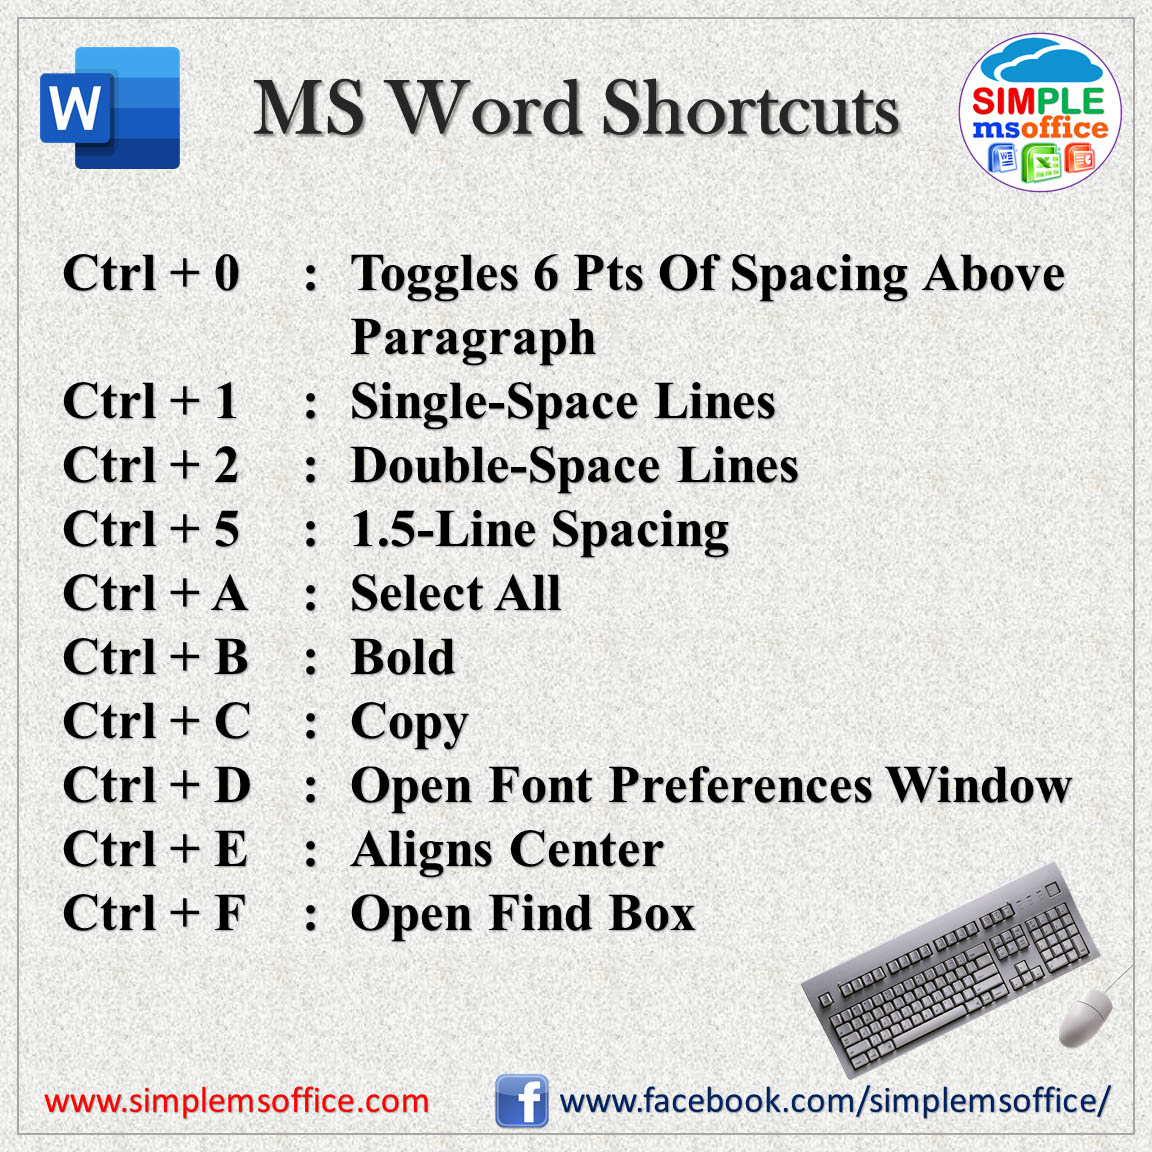 ms-word-shortcuts-04-simplemsoffice